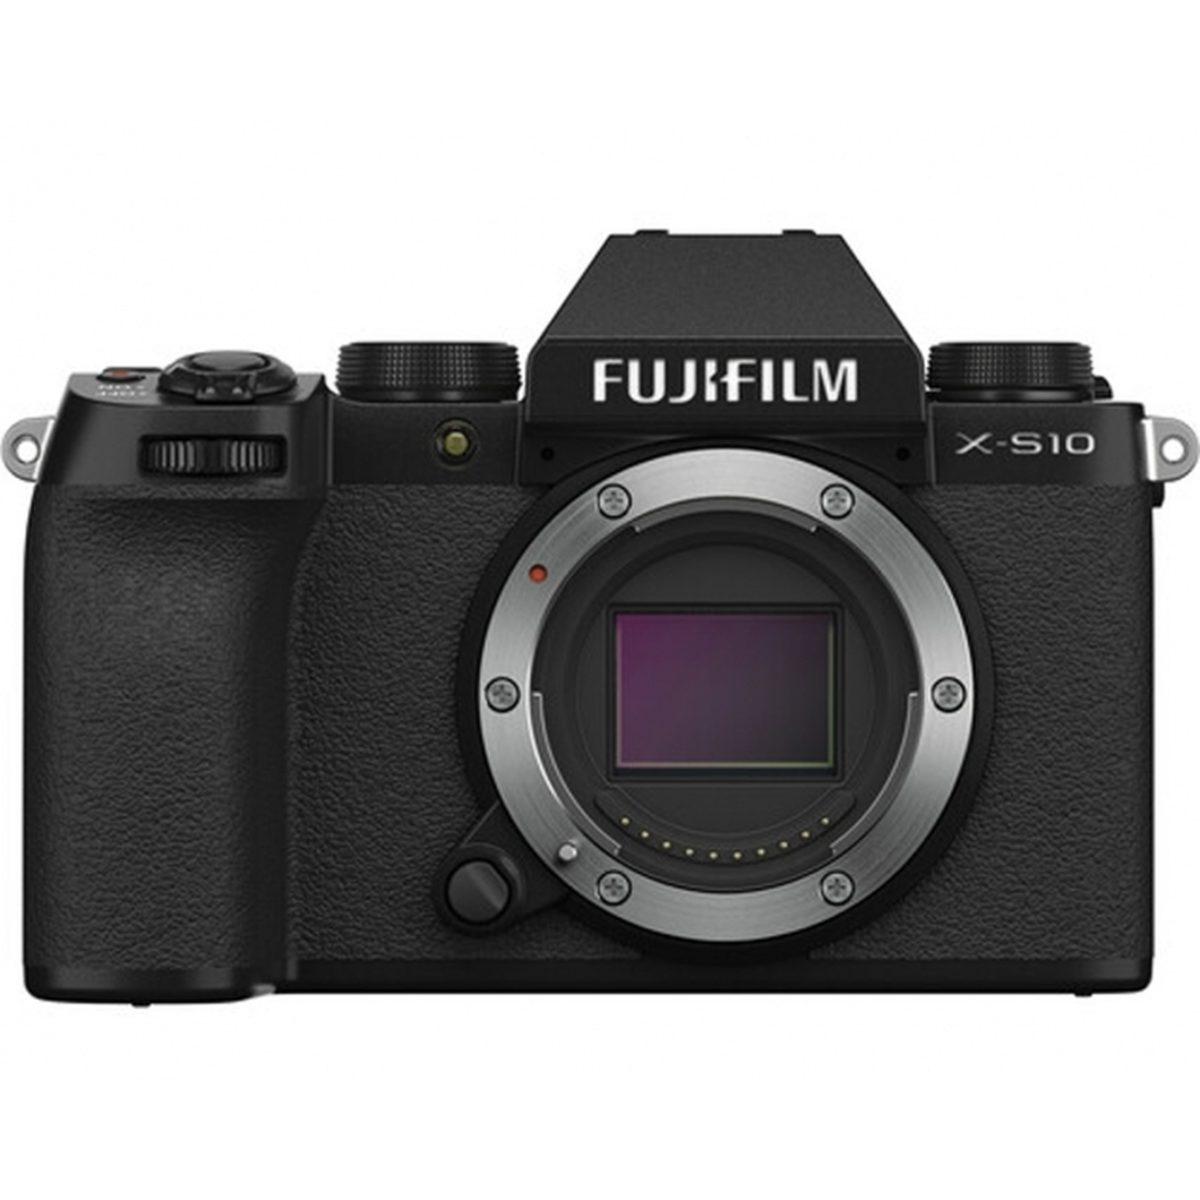 Fujifilm X-S10 Body Black Fotocamera mirrorless Aps-c - Garanzia Fujifilm Italia 2 anni